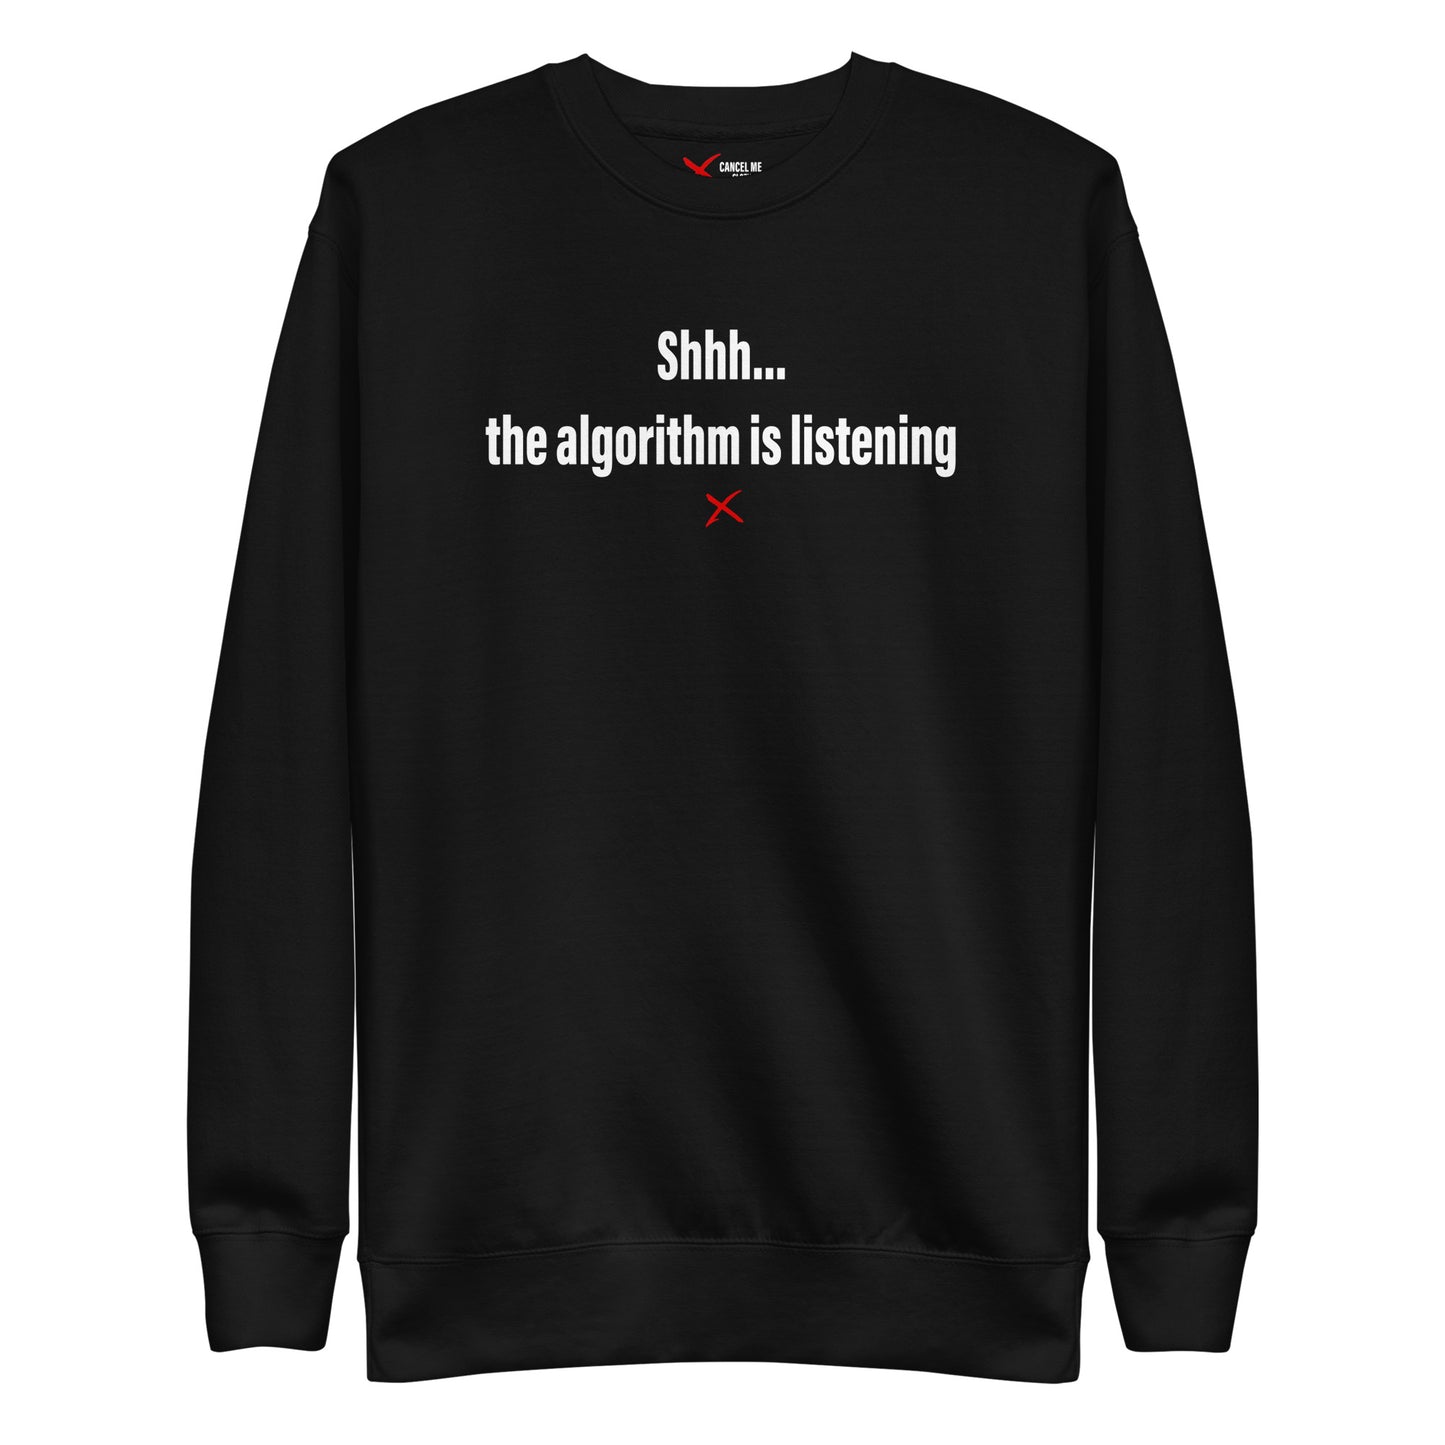 Shhh... the algorithm is listening - Sweatshirt